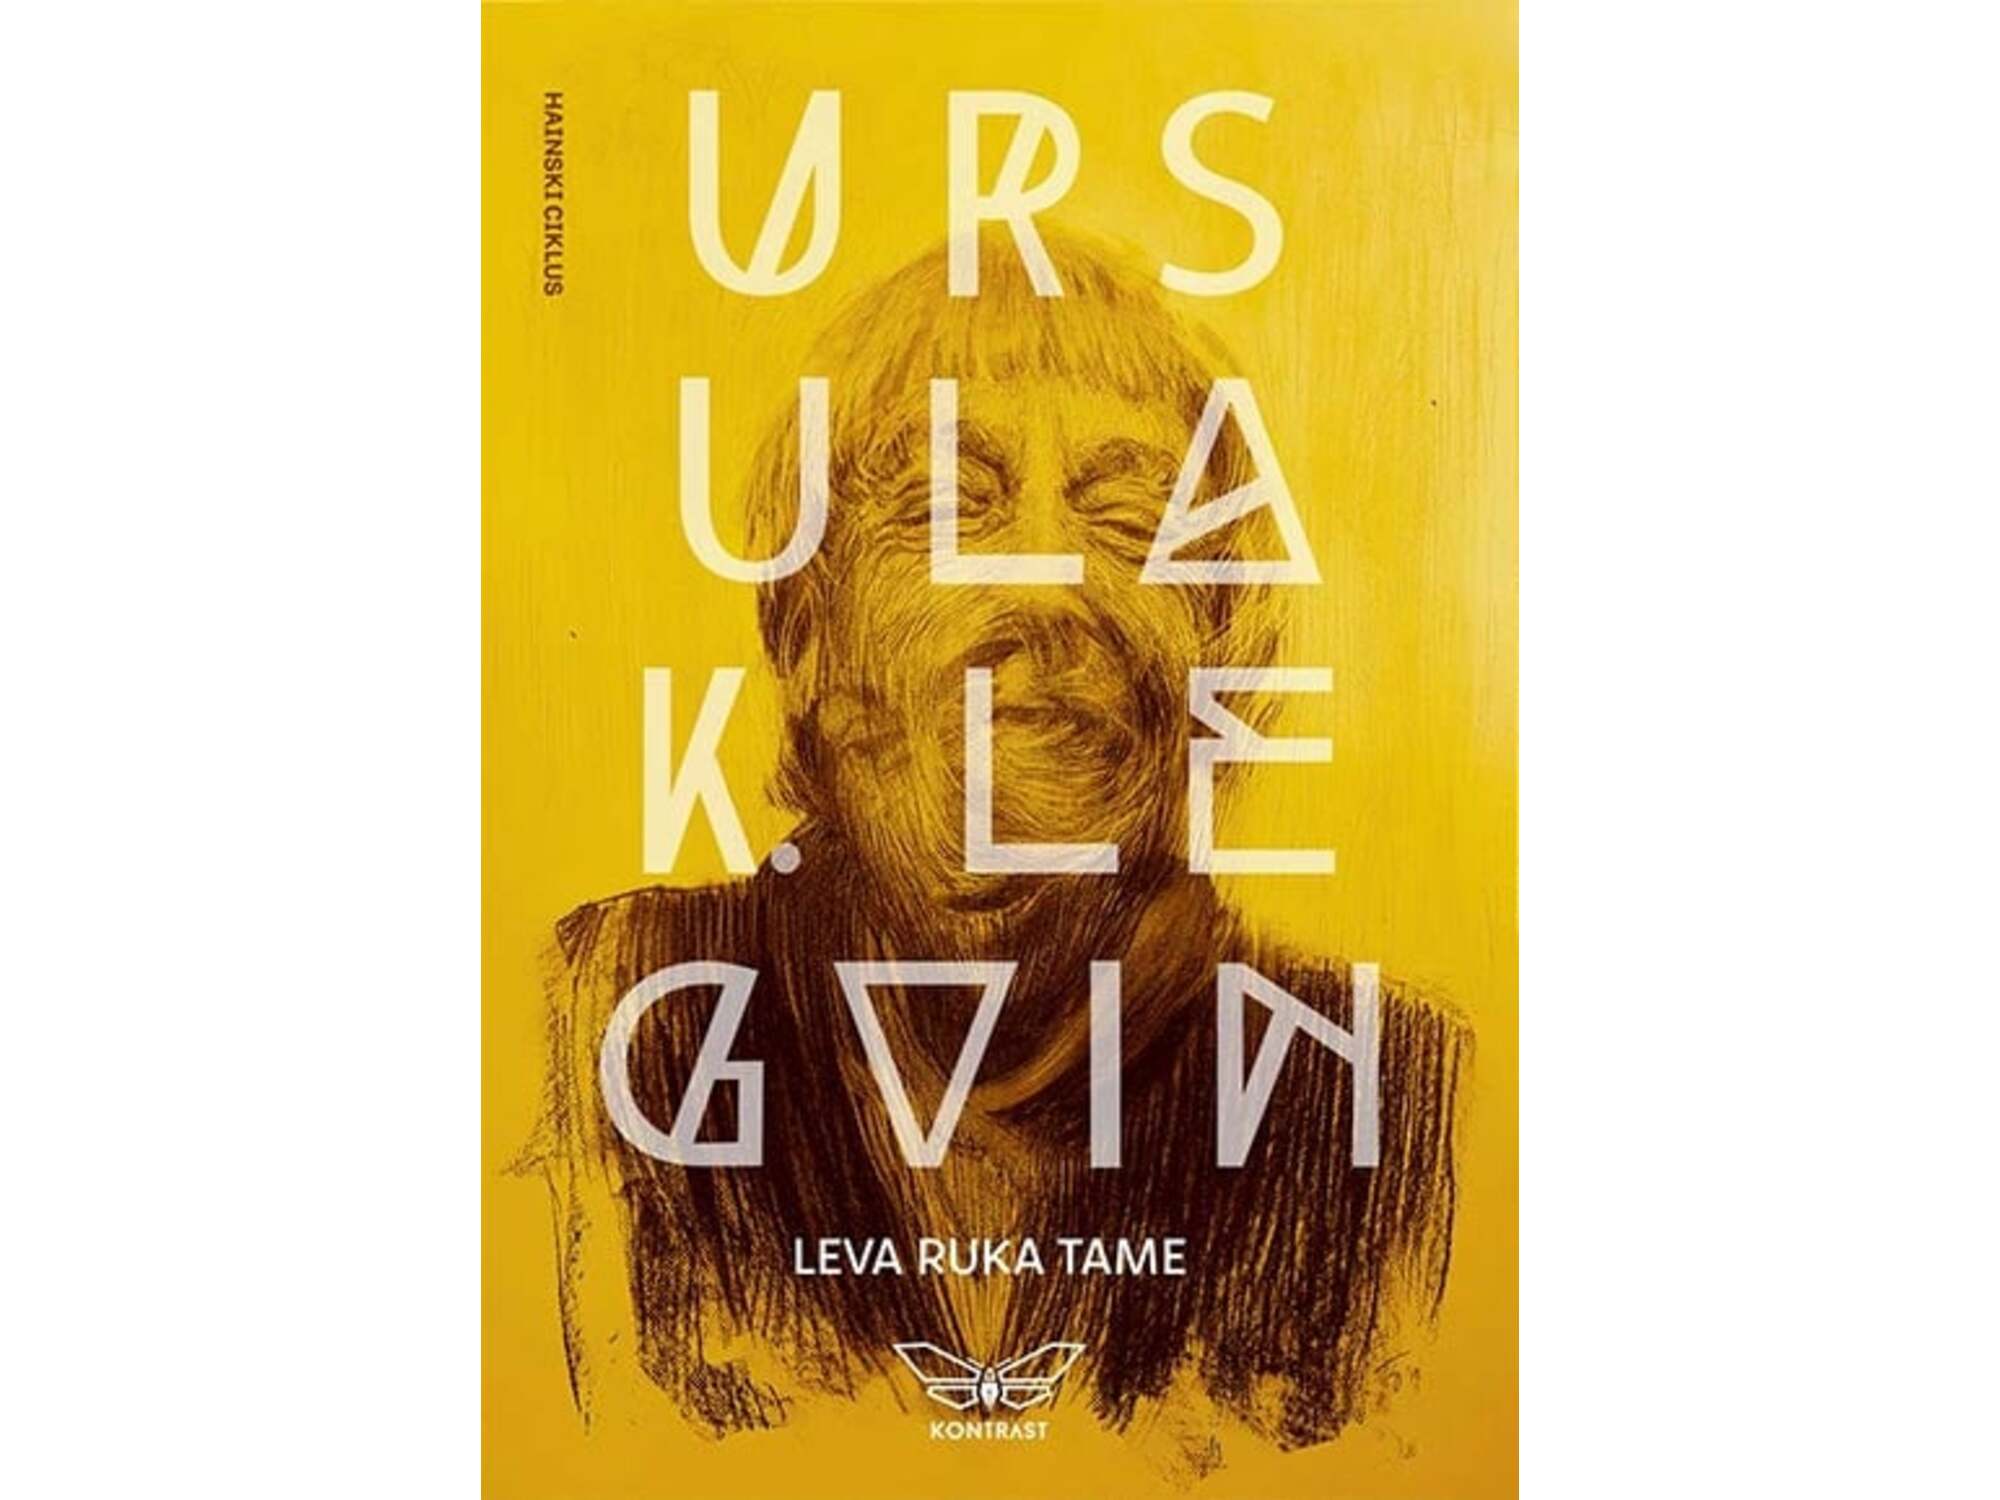 Leva ruka tame - Ursula K. le Gvin